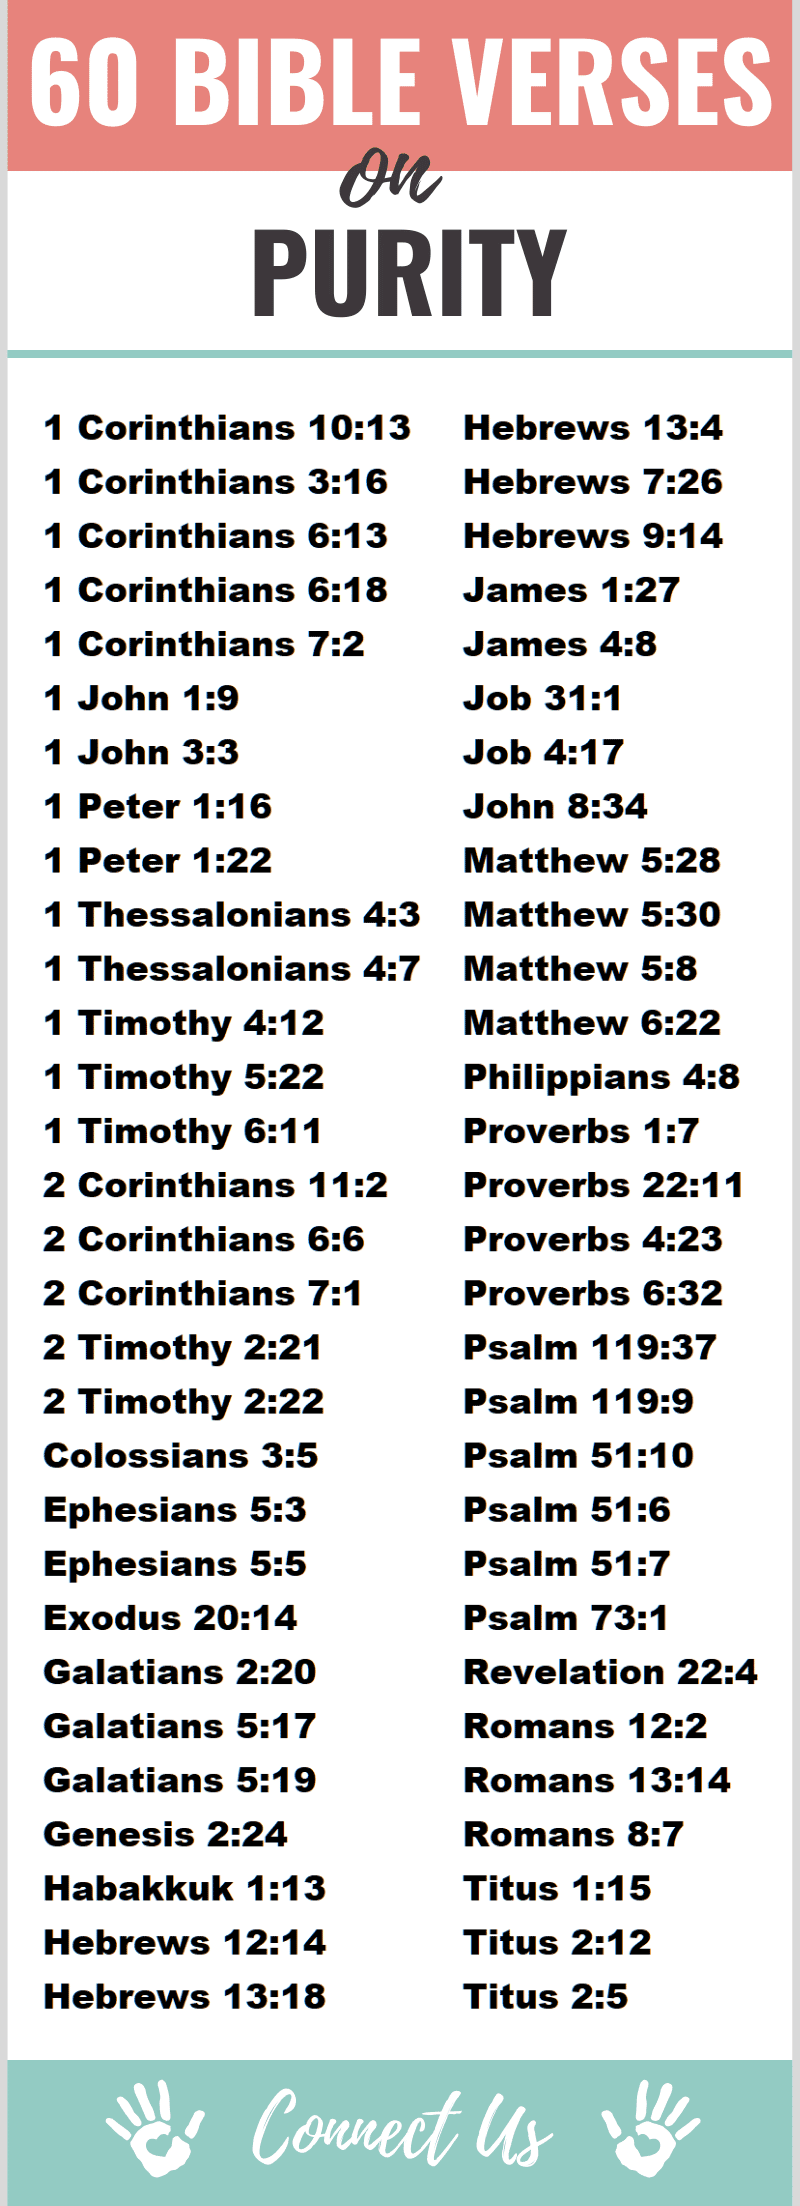 Bible Verses on Purity